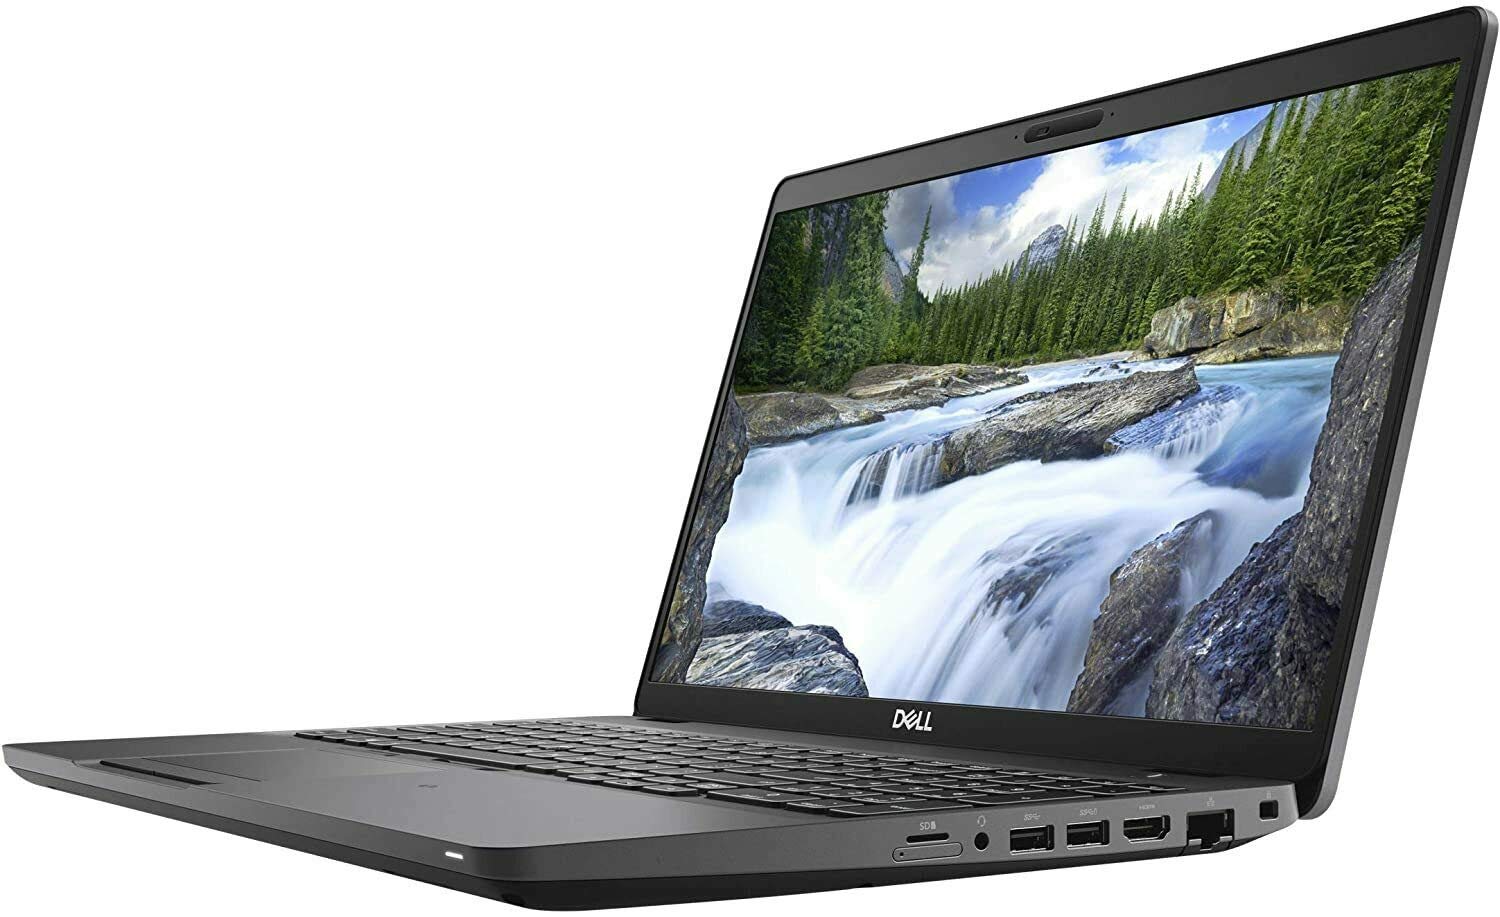 Dell Latitude 5501 Business Notebook - 15.6-inch FHD Laptop (Intel Quad-Core i5-9400H, 32GB DDR4 Ram, 1TB PCIe NVMe SSD, HDMI, Camera, WiFi, Numeric Keyboard, Bluetooth 5.0) Windows 10 Pro (Renewed)